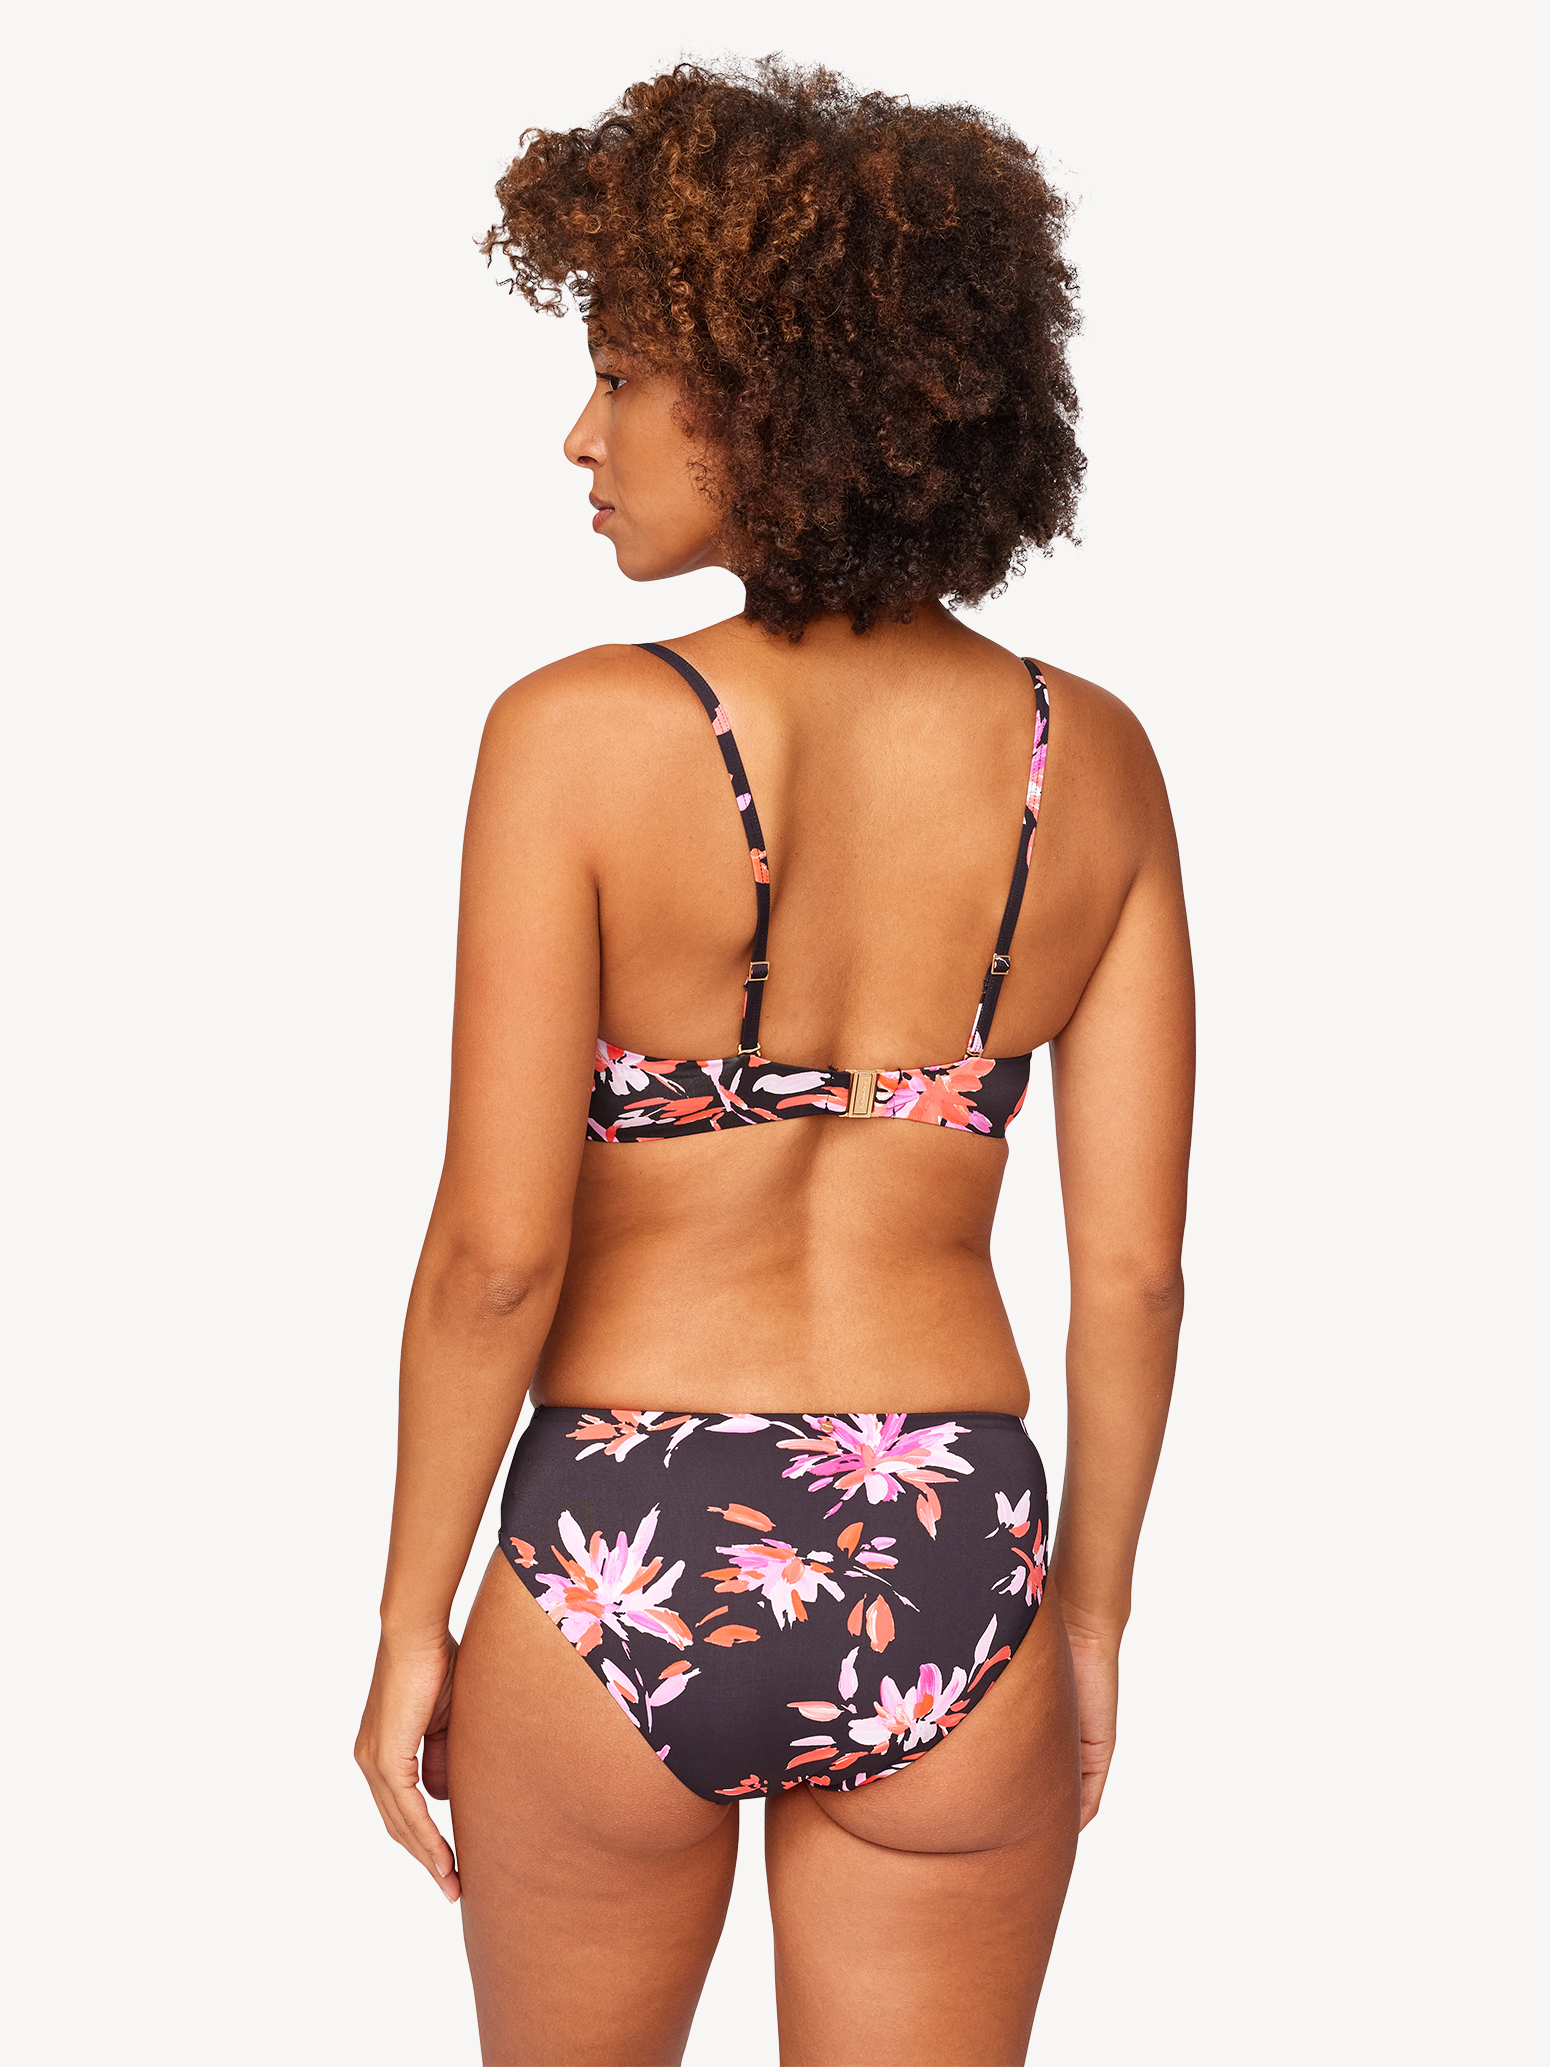 Bikini top - black, Pink Flower AOP, hi-res